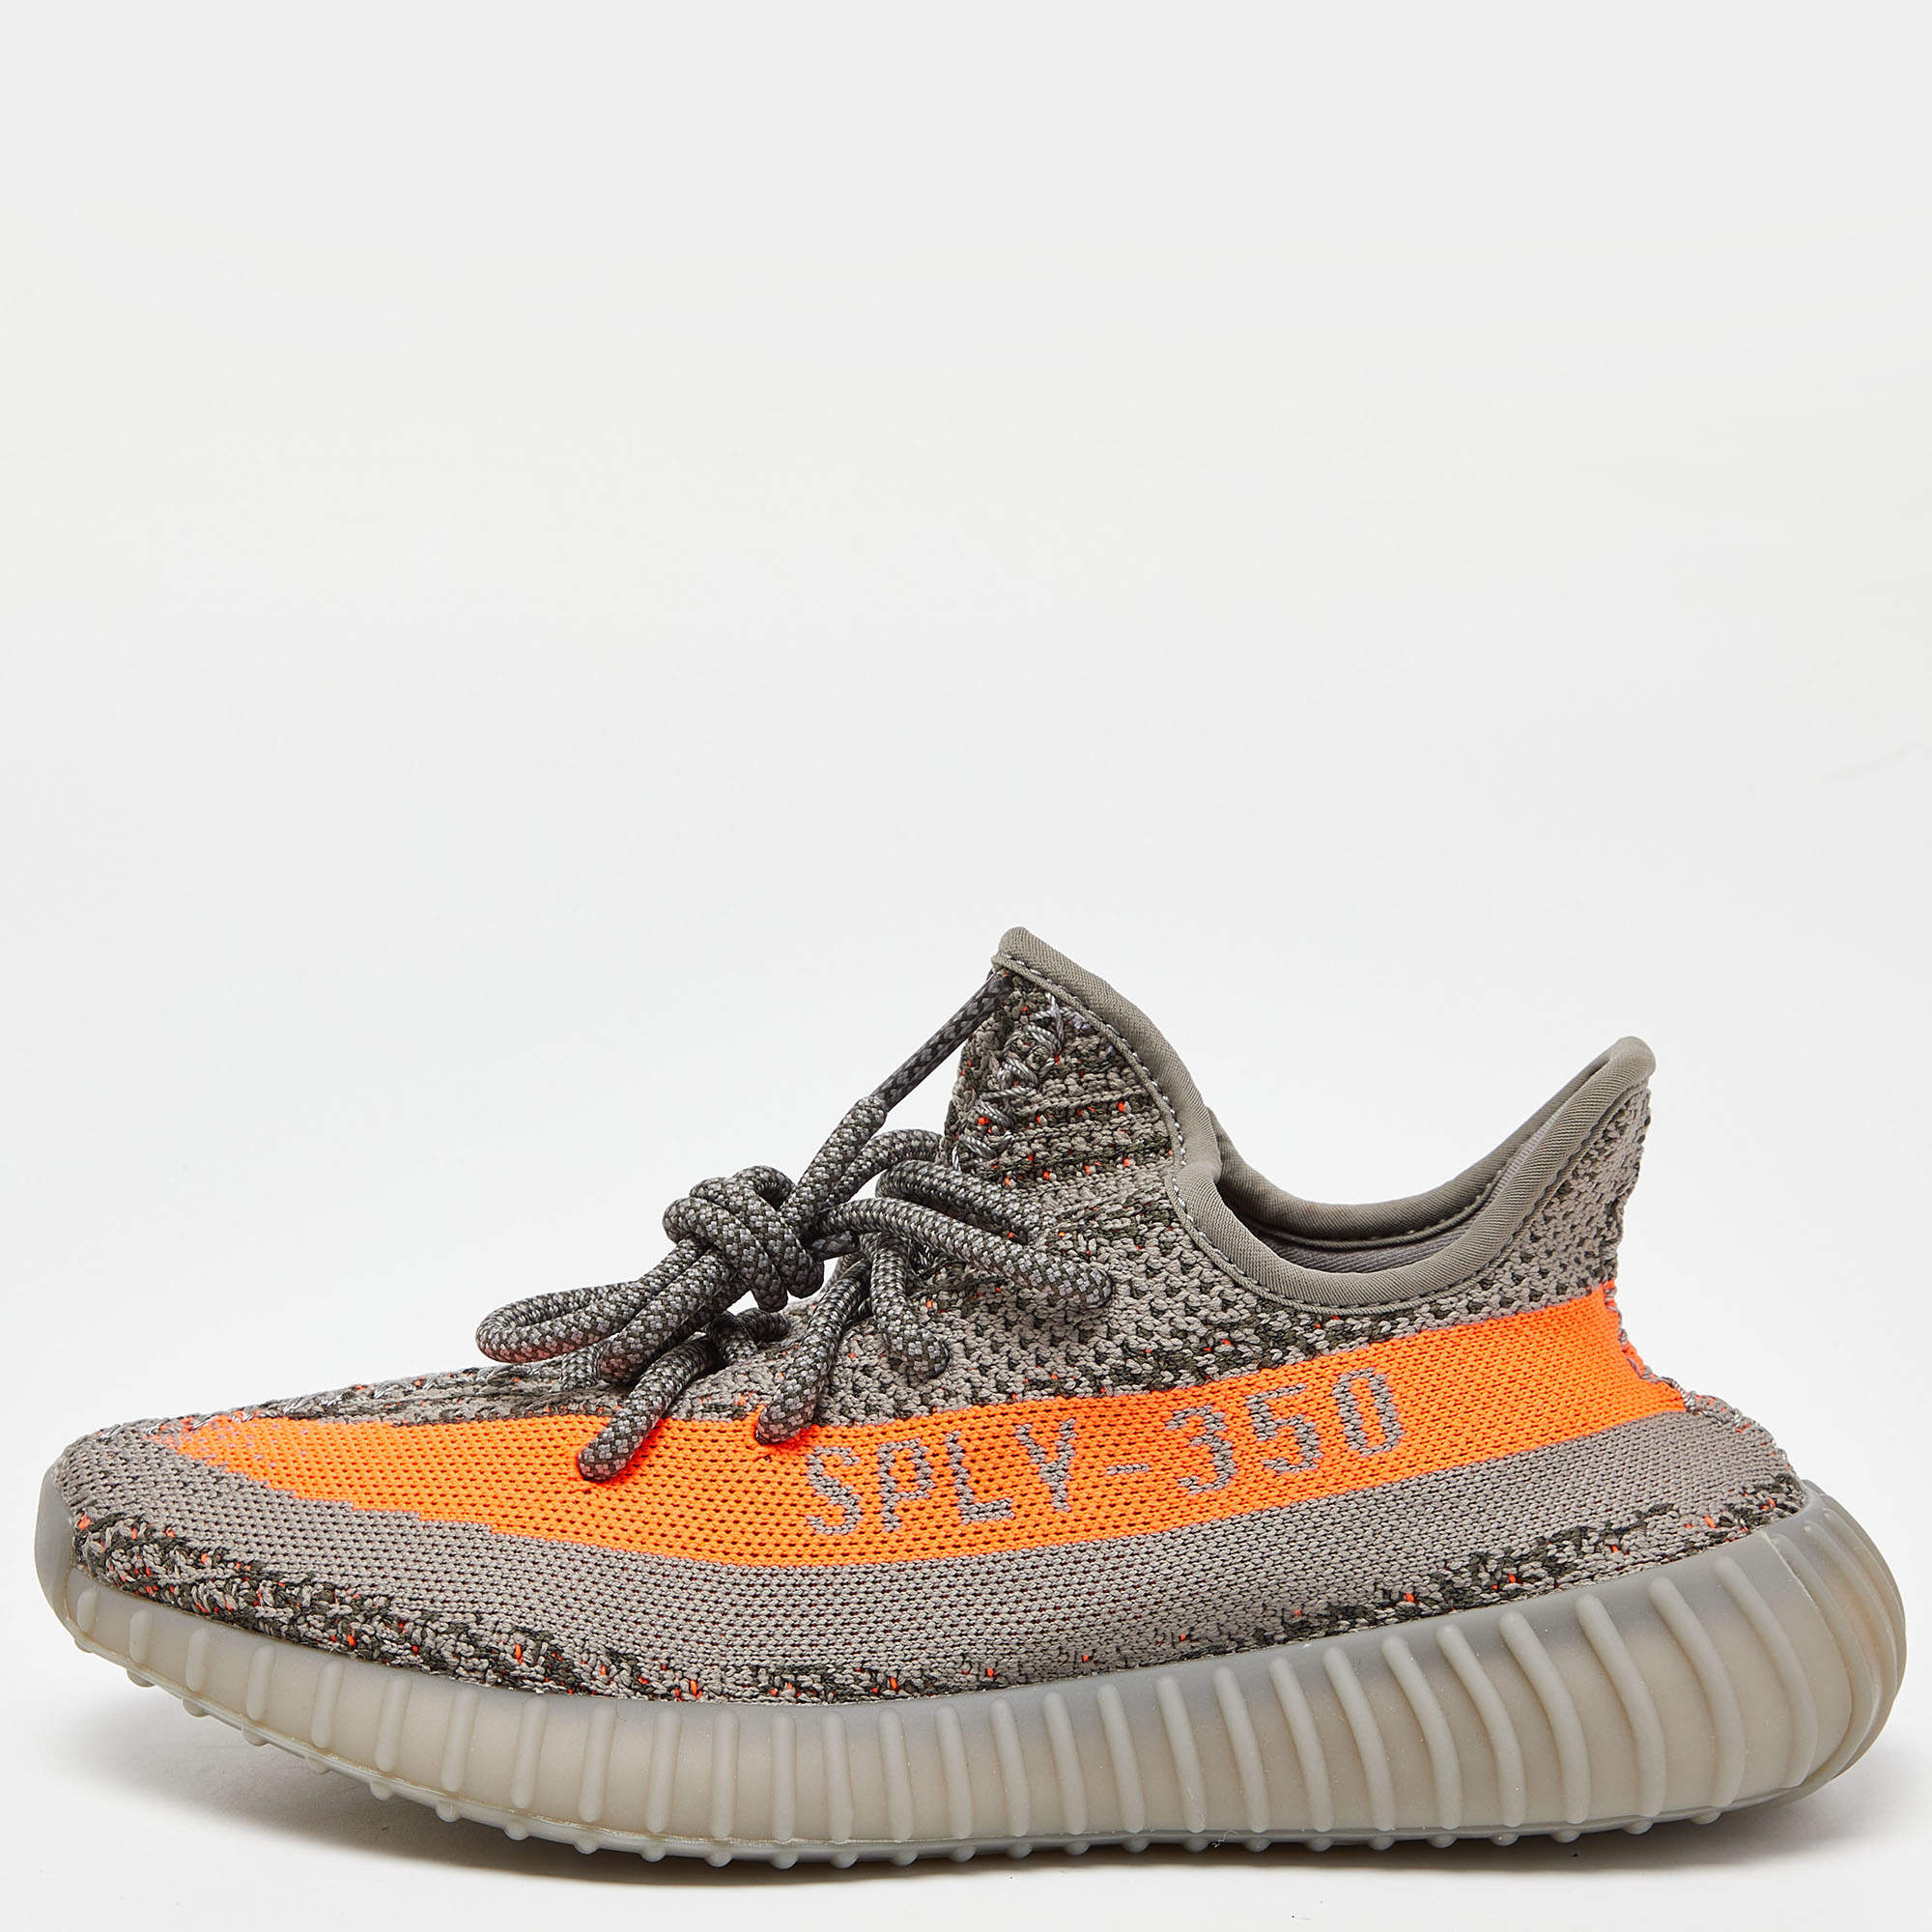 Yeezy x Adidas Grey/Orange Knit Fabric Boost 350 V2 Beluga Reflective Sneakers Size 39 1/3